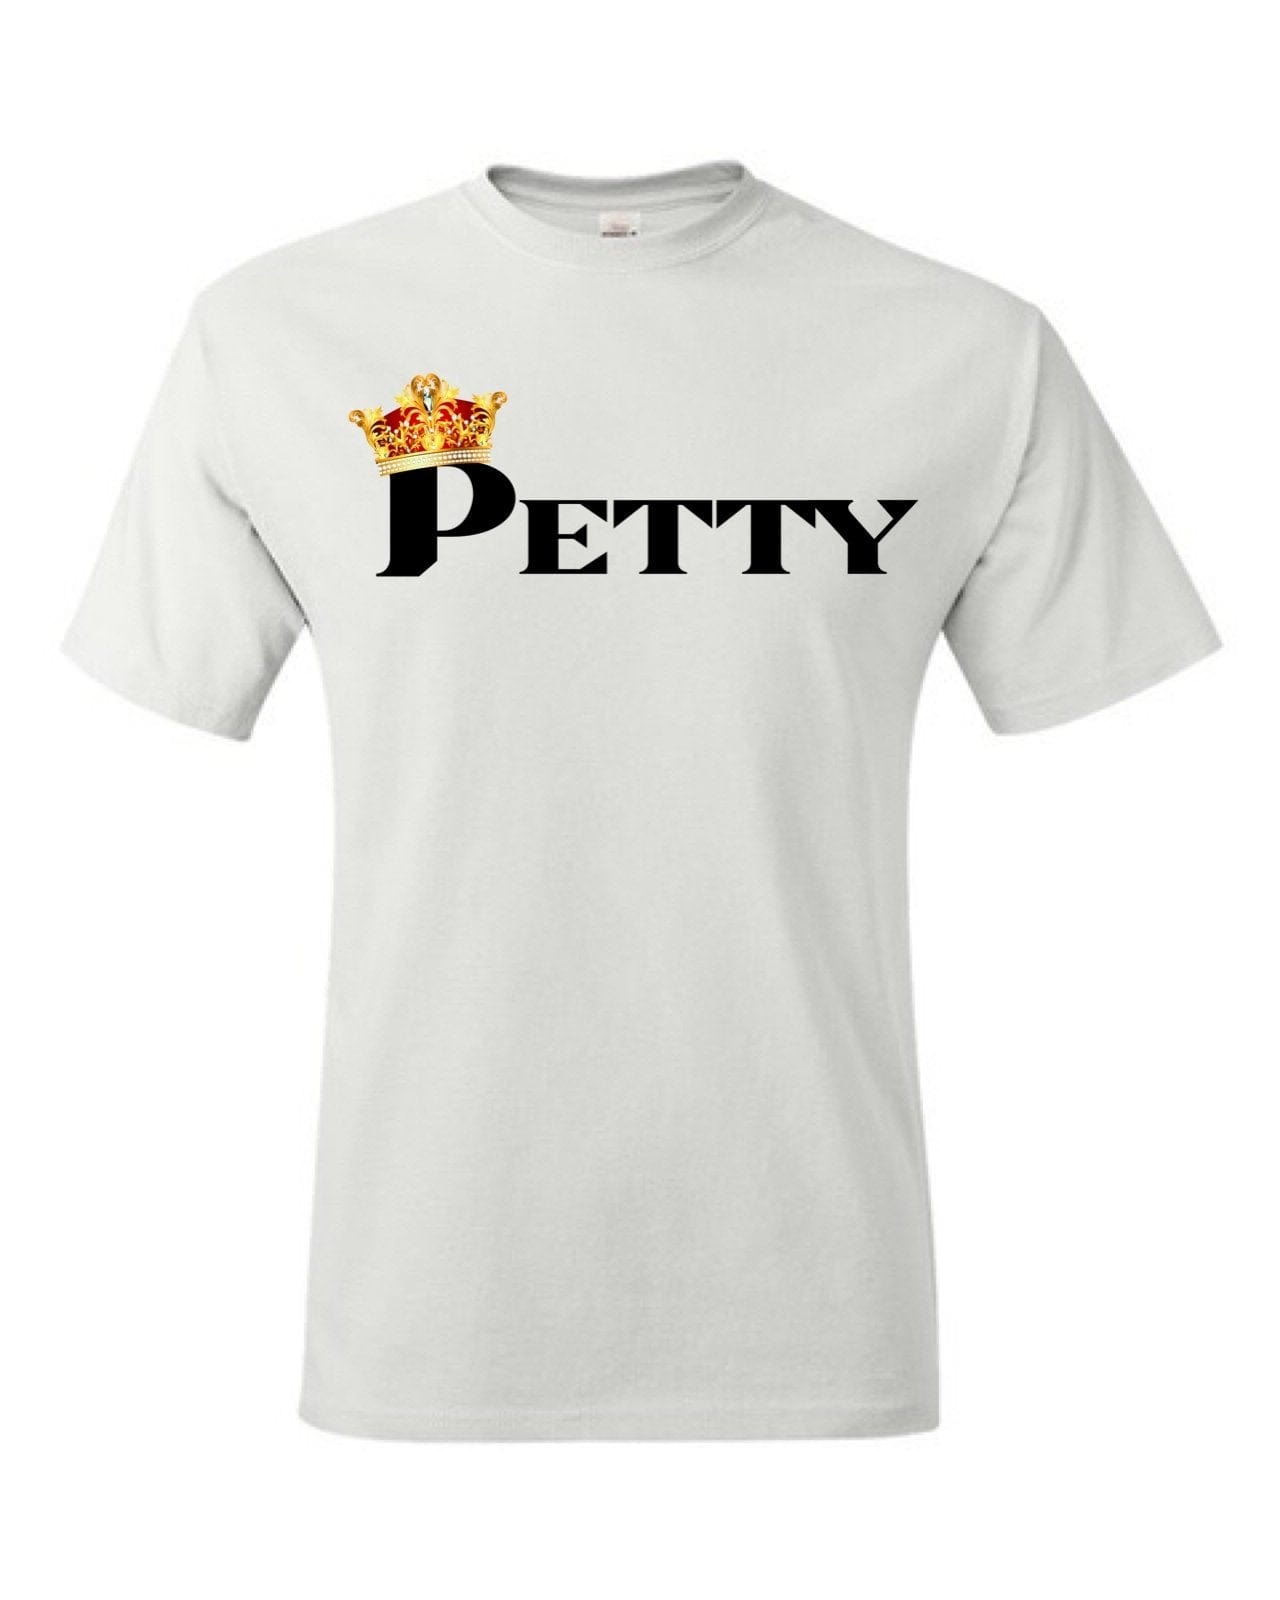 InsensitiviTees Shirts S / White Petty King